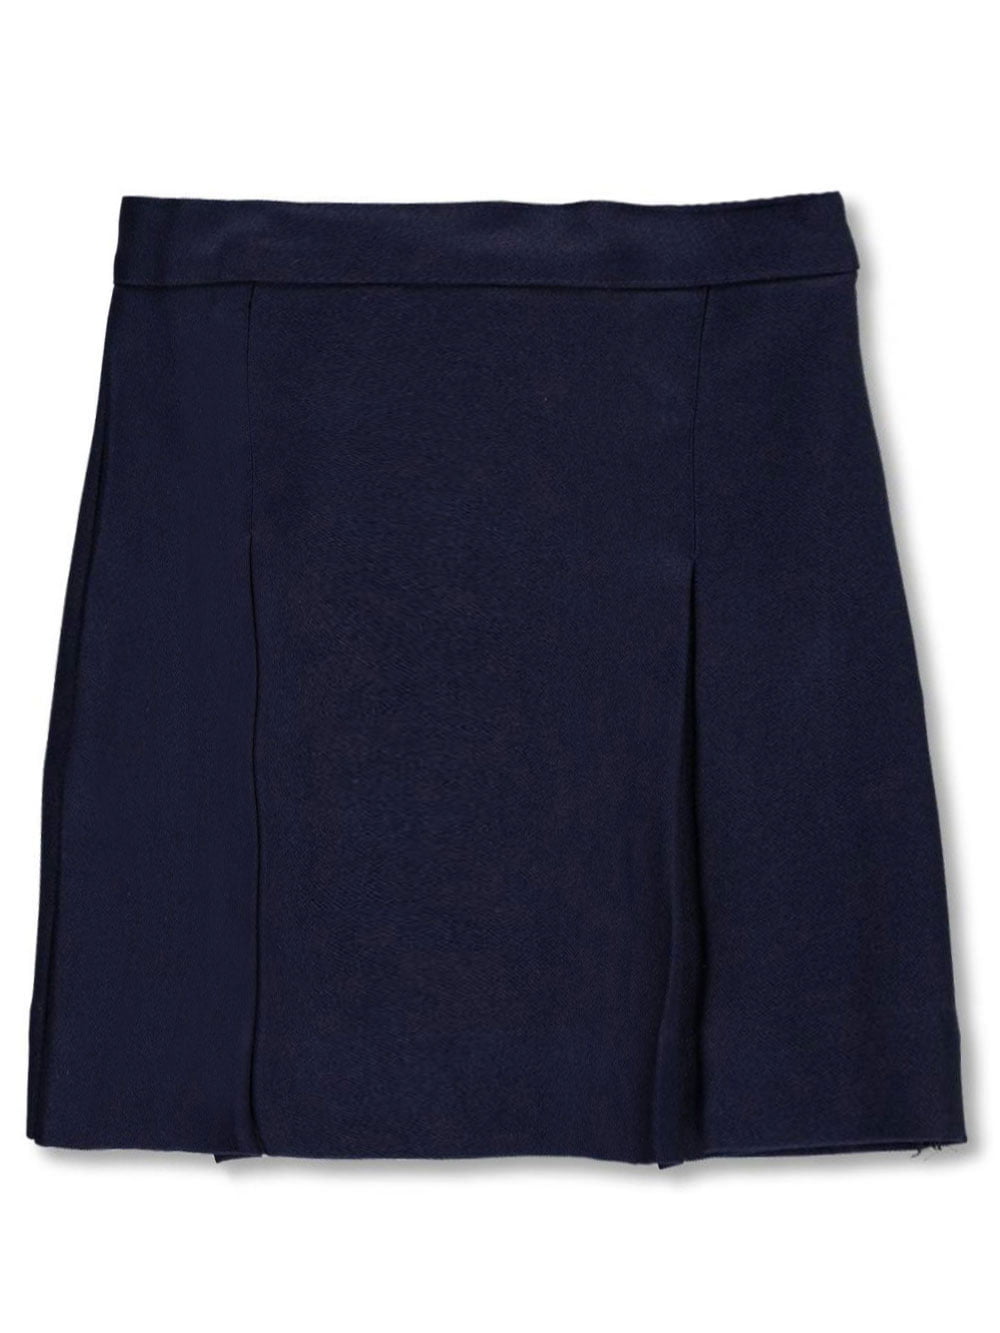 Dickies Girls School Uniform Scooter Skirt Shorts Khaki Tan Poly Twill 12.5 New 